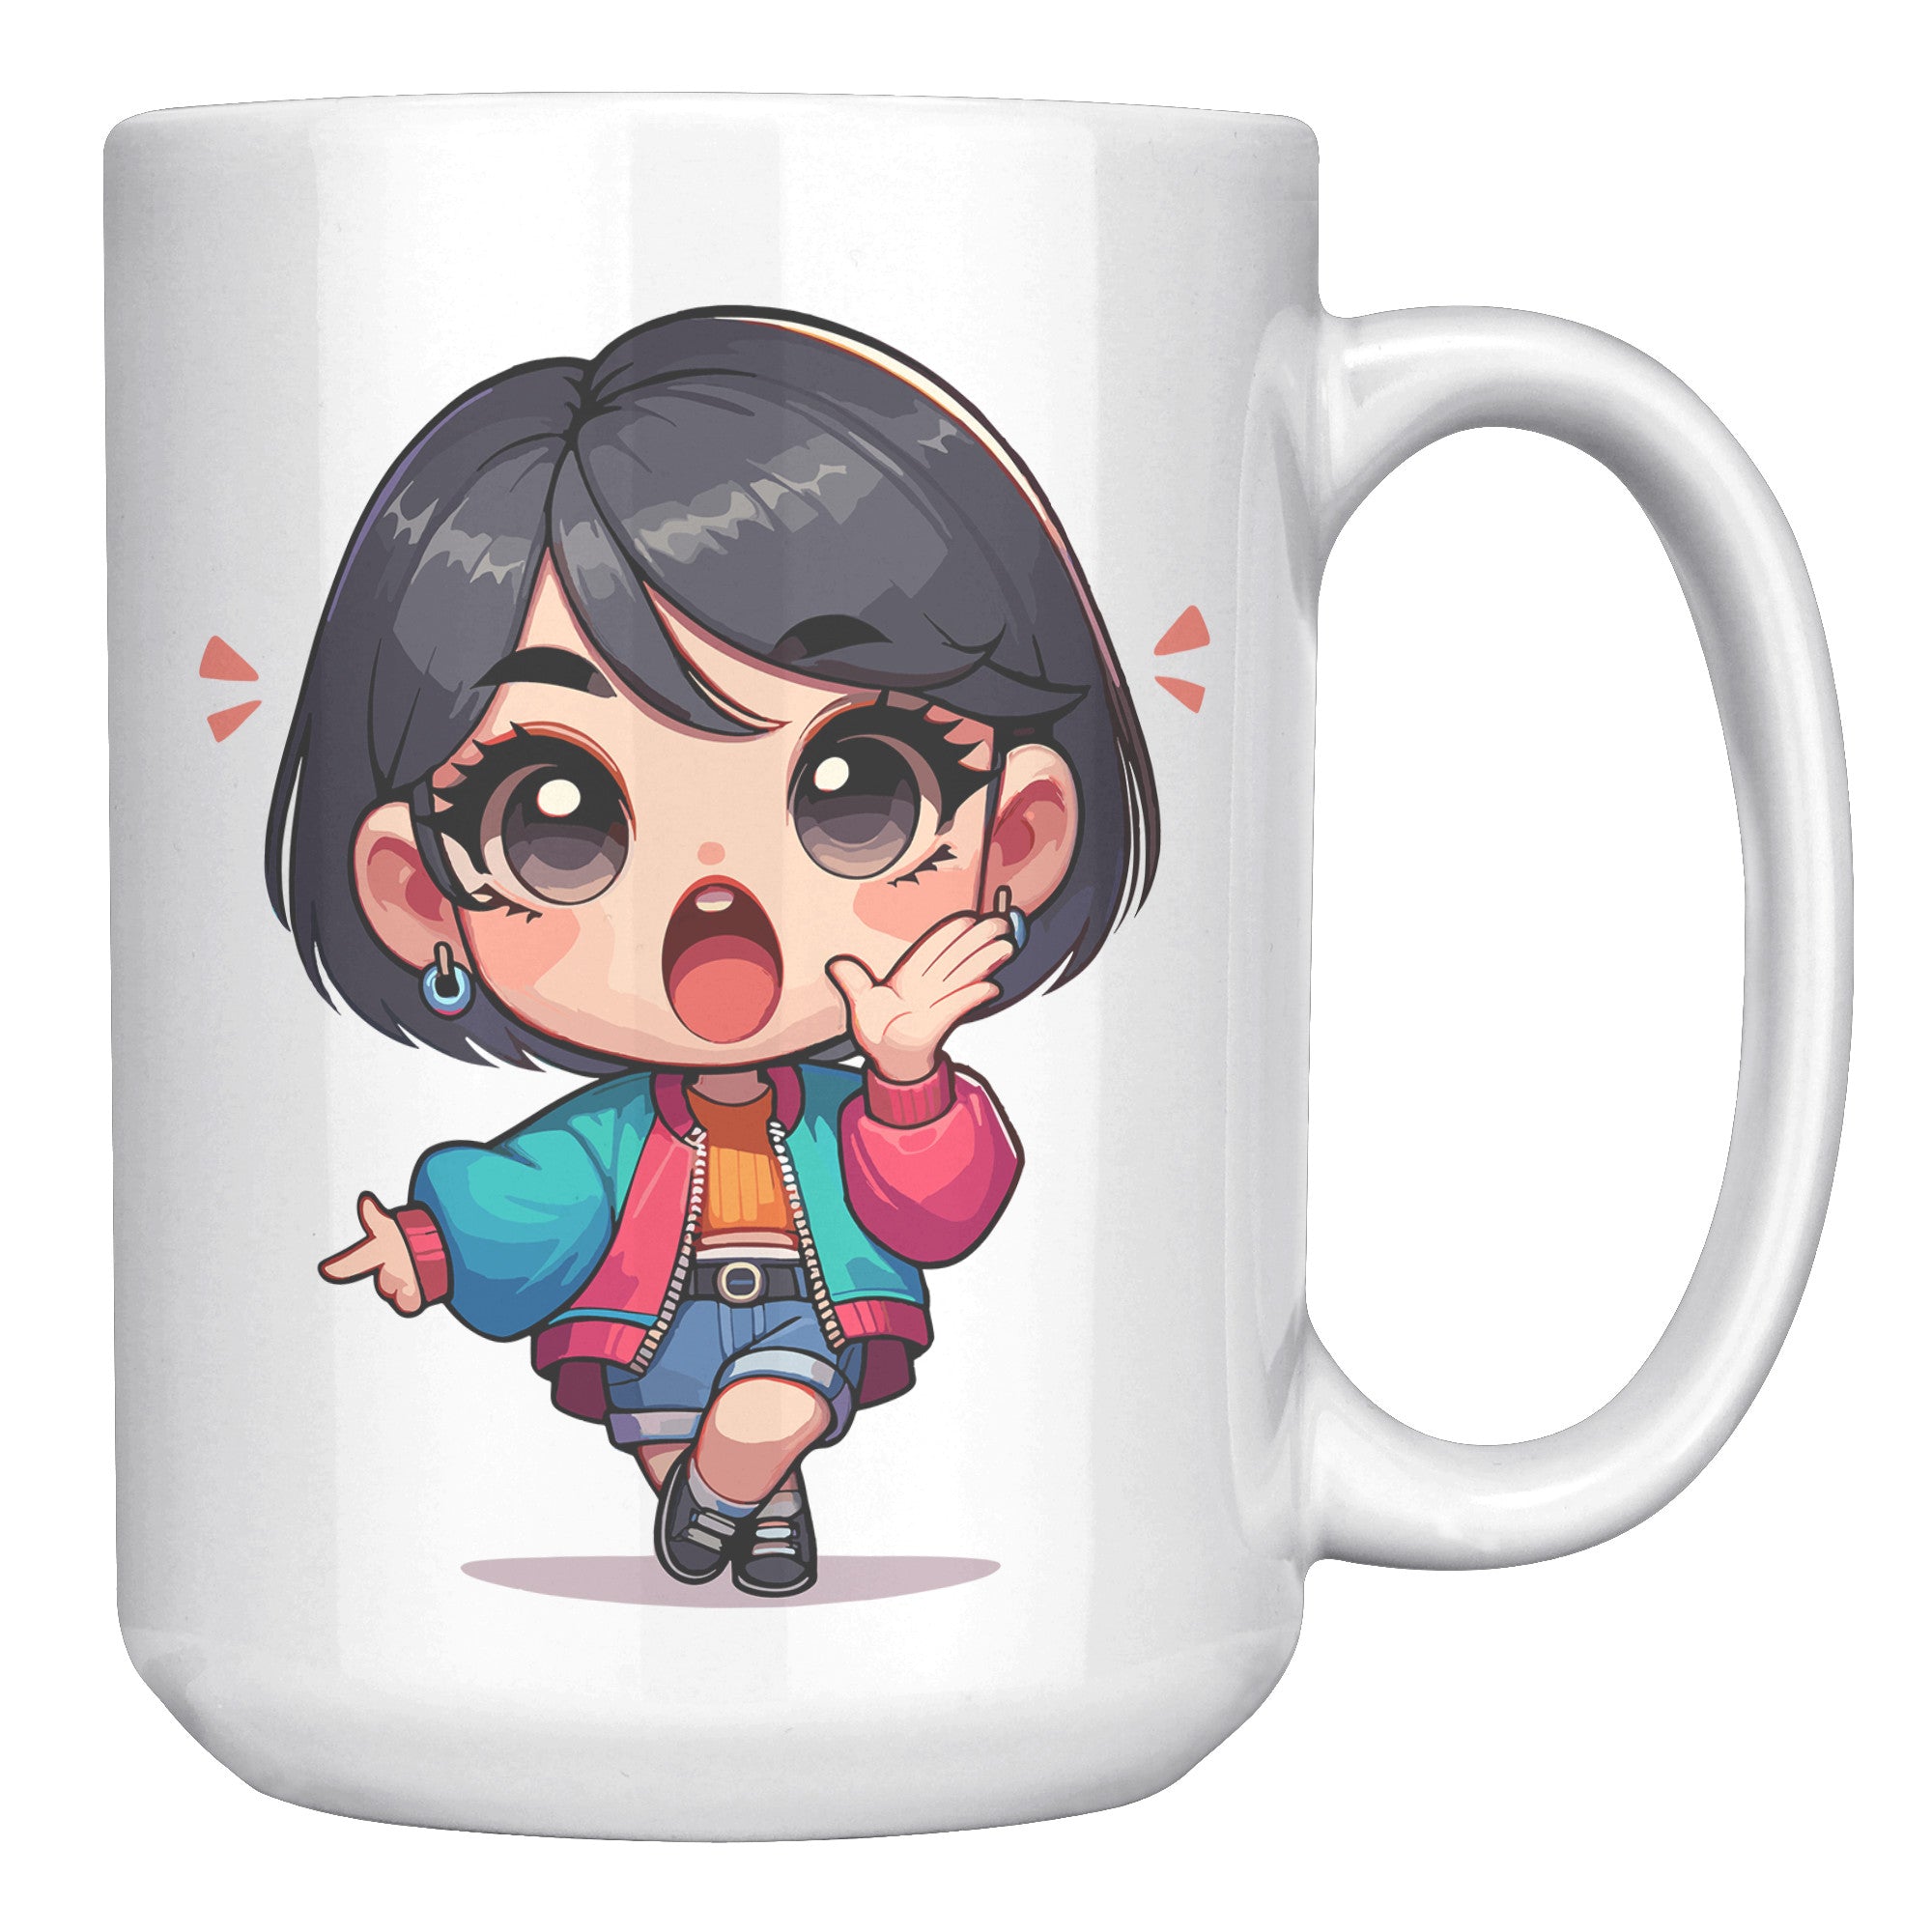 "Marites Gossip Queen Coffee Mug - Cute Cartoon 'Ano Ang Latest?' Cup - Perfect Chismosa Gift - Filipino Slang Tea Mug" - MMM1